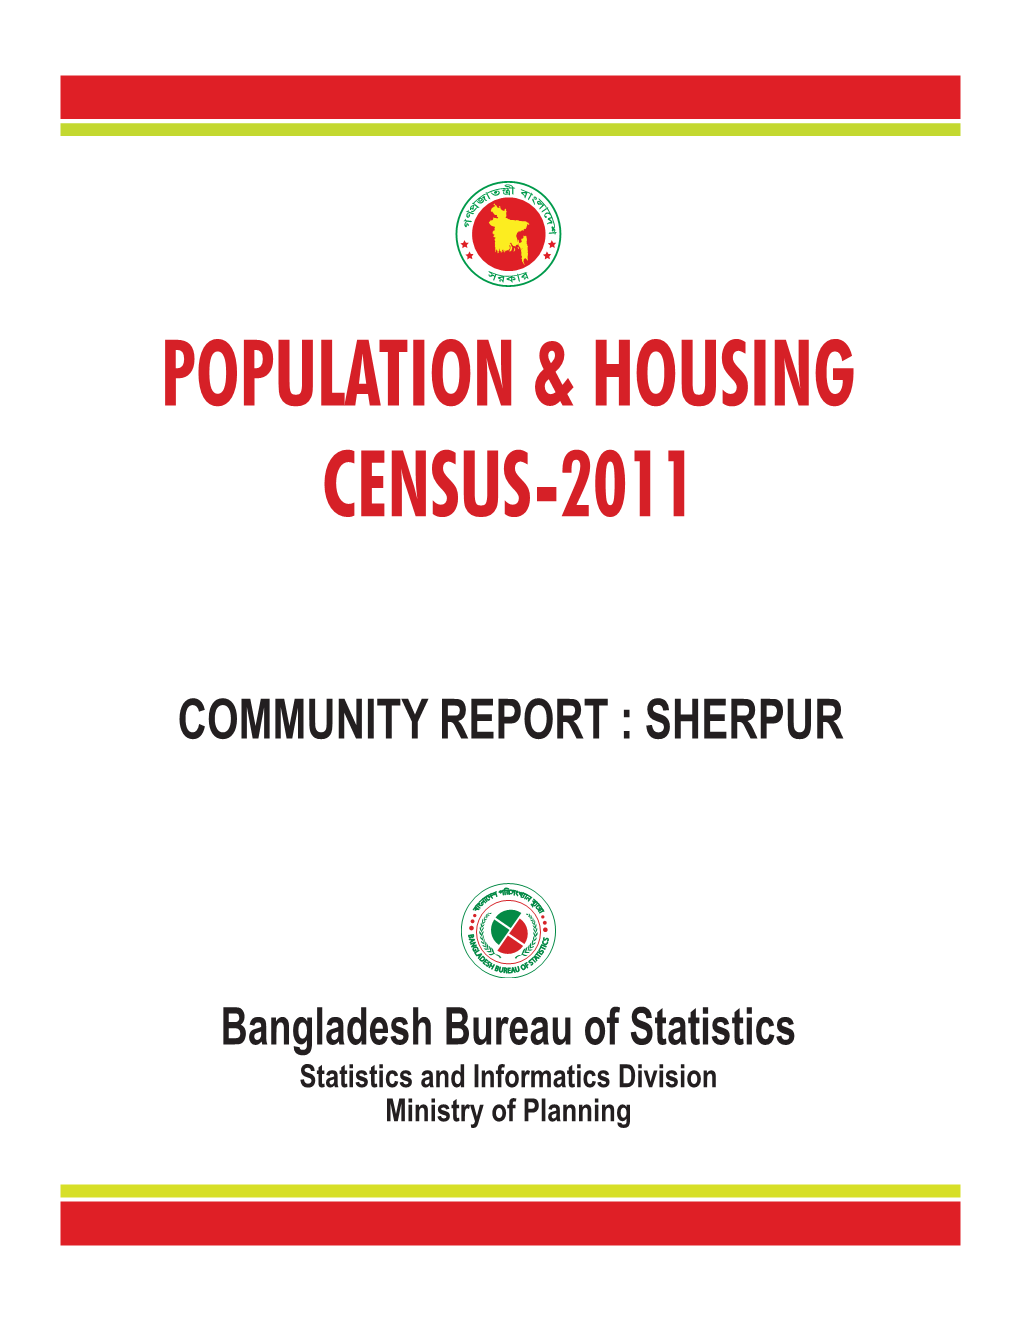 Population & Housing Census-2011